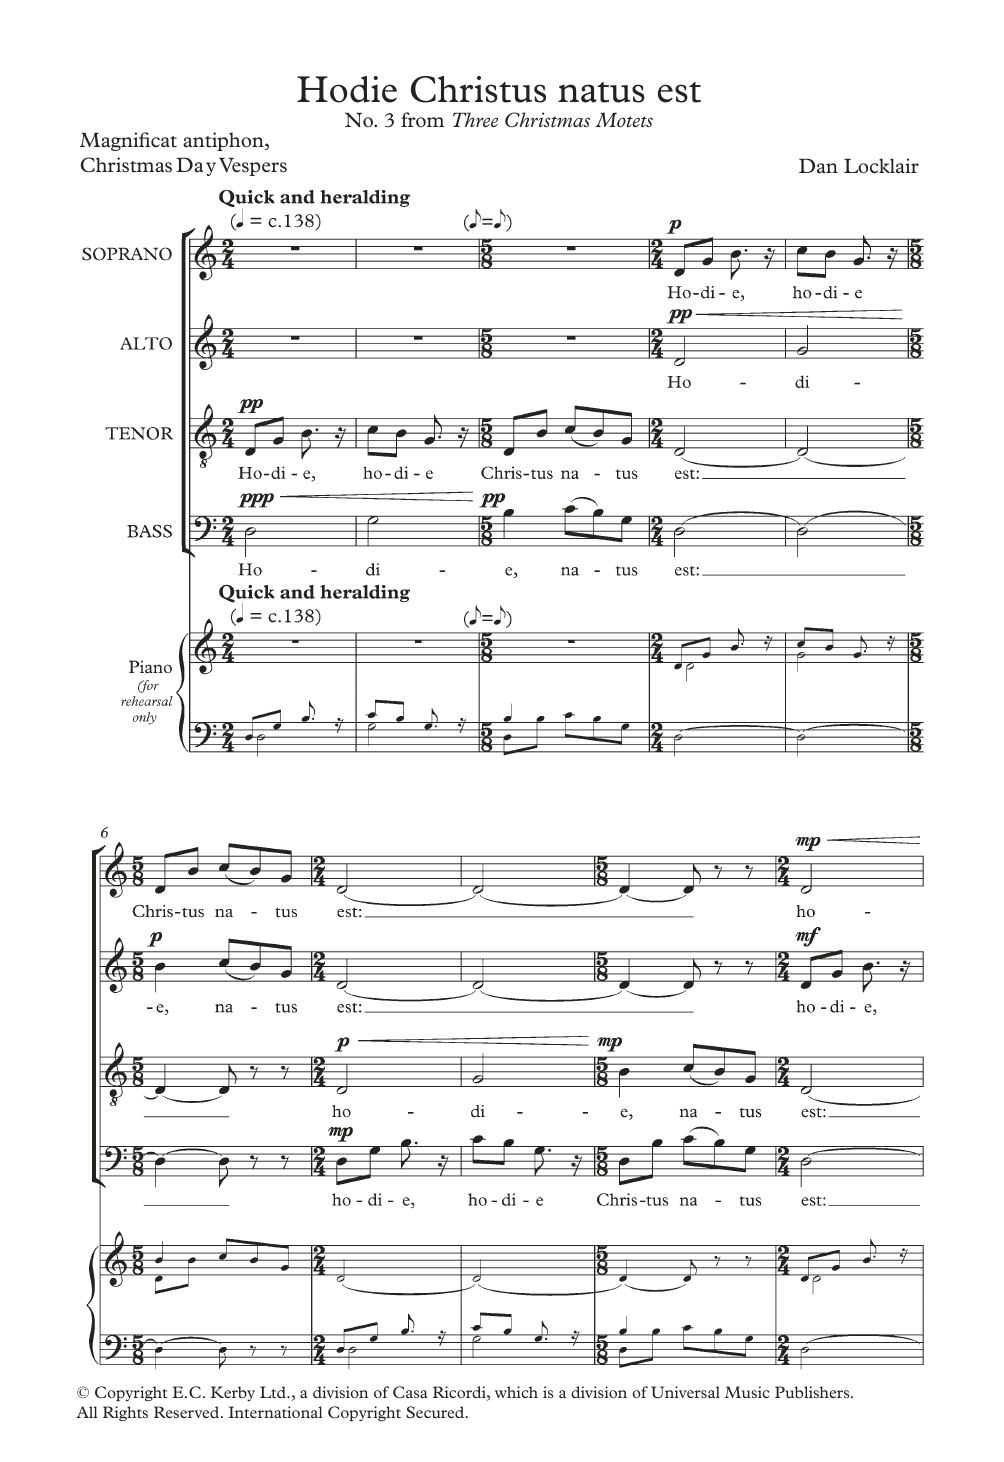 Download Dan Locklair Hodie Christus Natus Est Sheet Music and learn how to play SATB PDF digital score in minutes